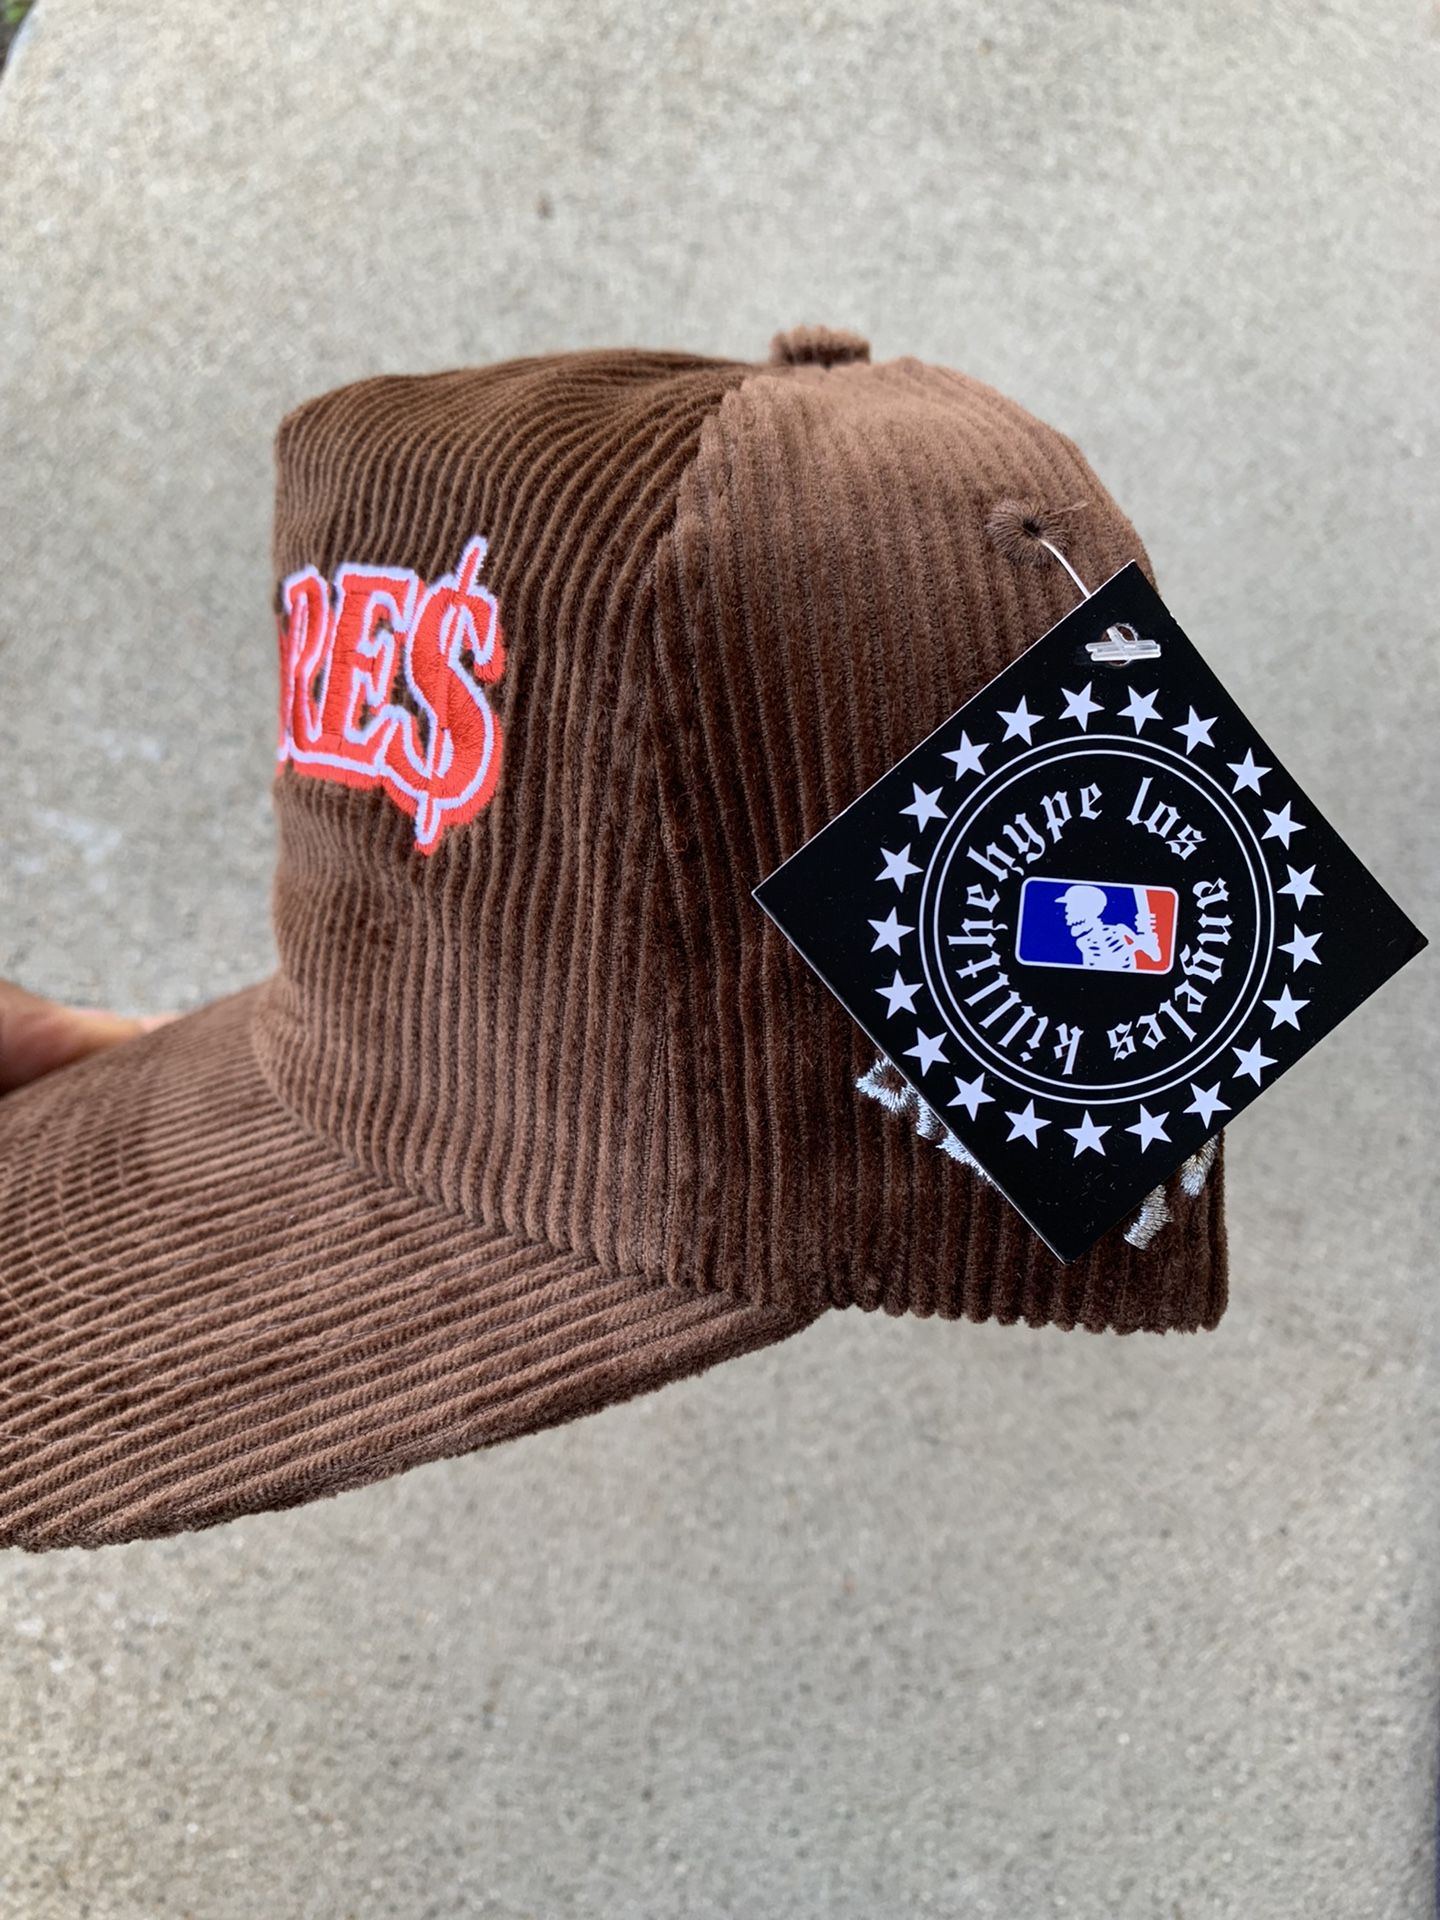 Kill The Hype (KTH-LA) Detroit Tigers Patch SnapBack Hat